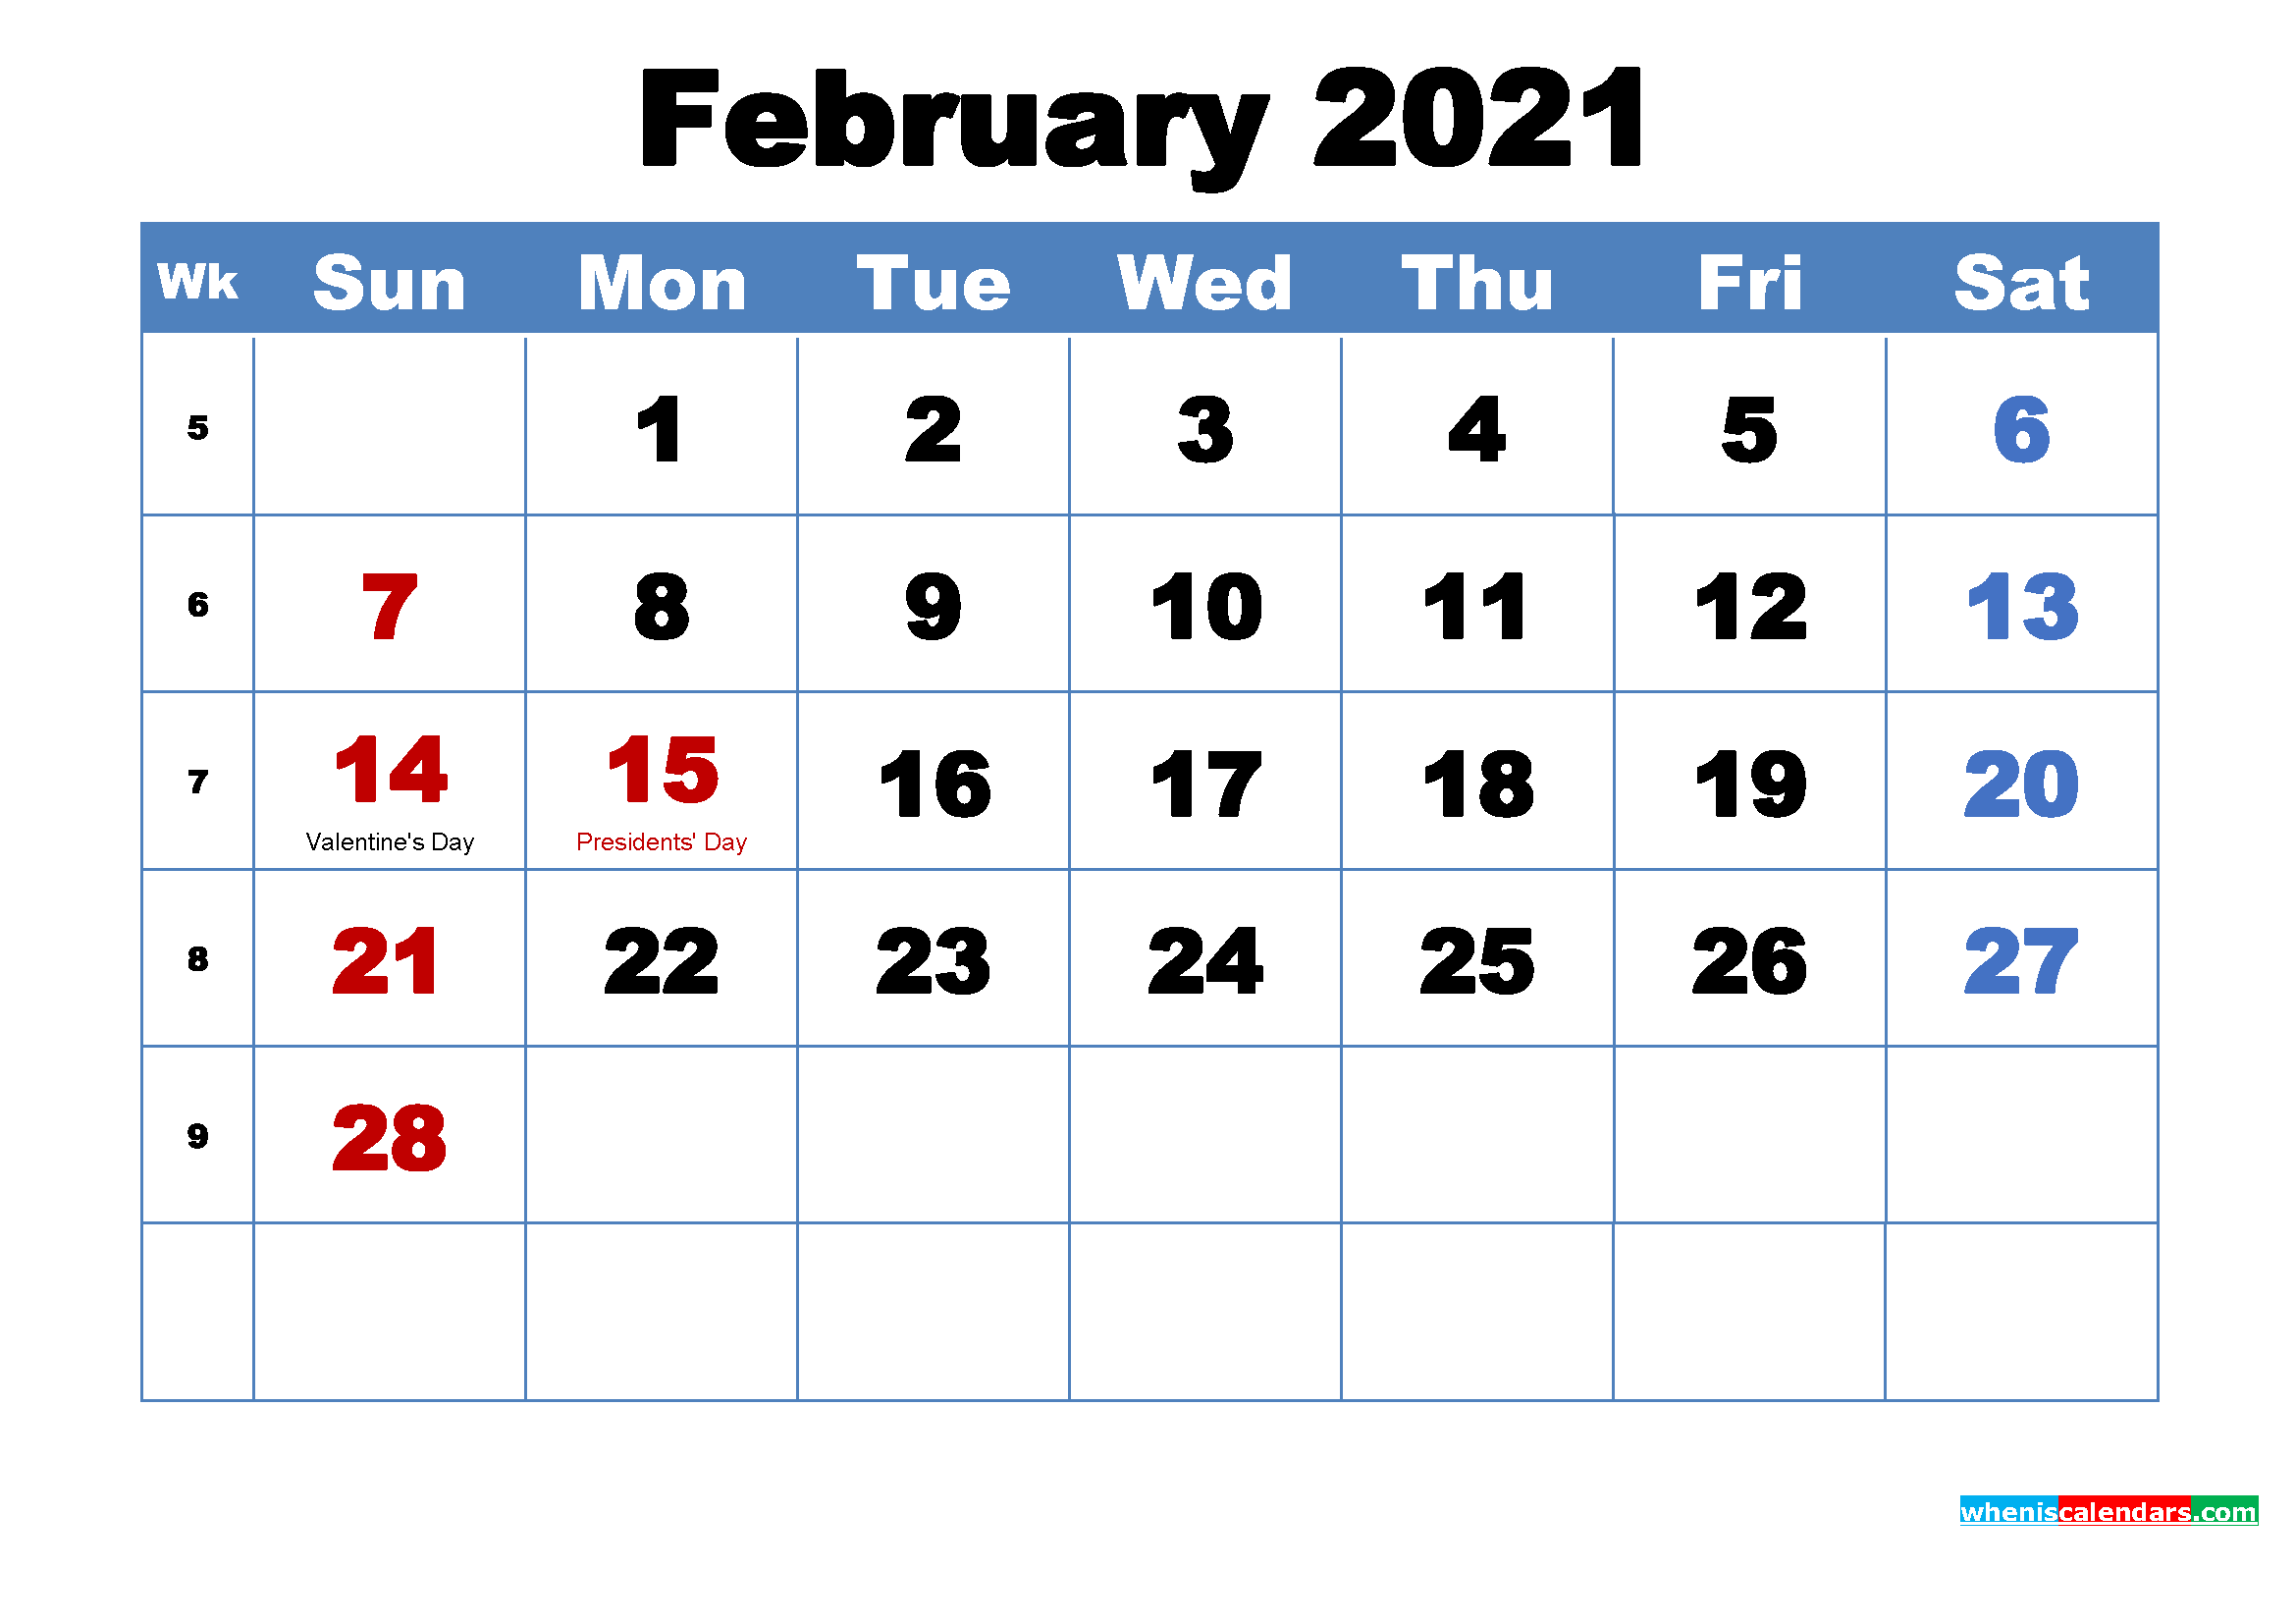 free desktop calendar 2021 February 2021 Desktop Calendar Free Download Free Printable 2020 Monthly Calendar With Holidays free desktop calendar 2021